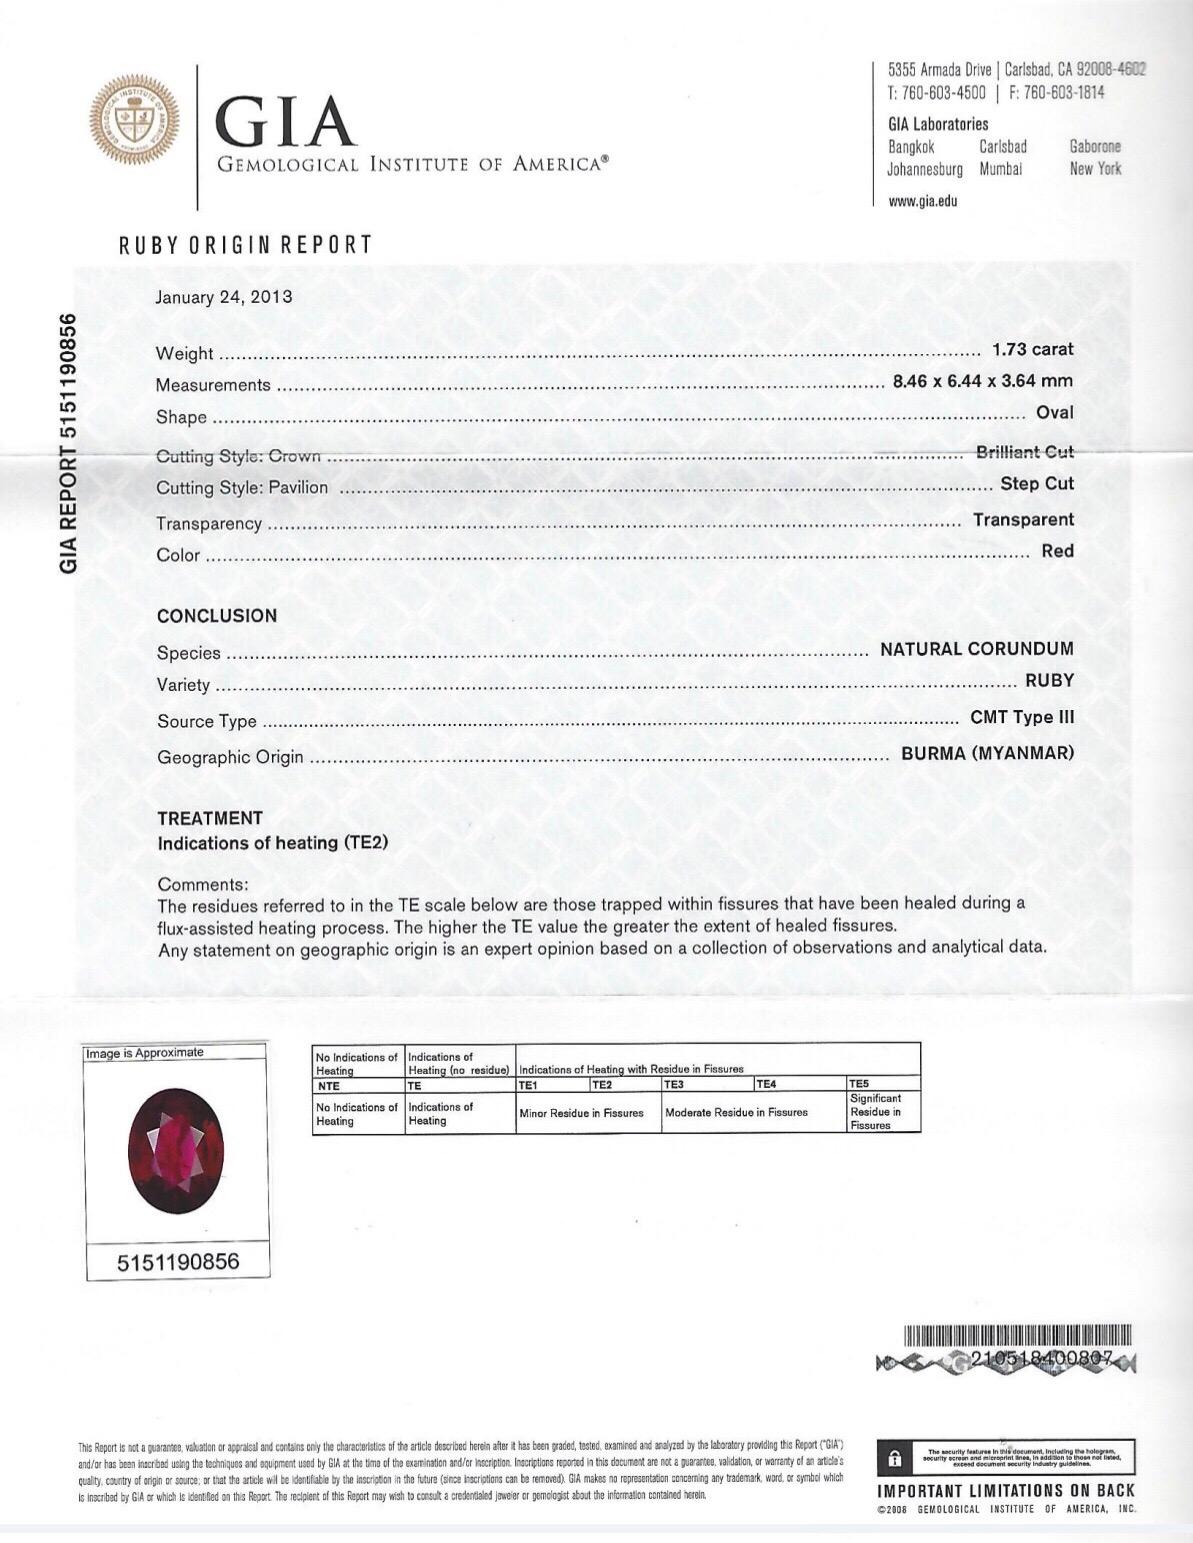 Modern Burma Ruby Earrings 3.51 Carat GIA Certified